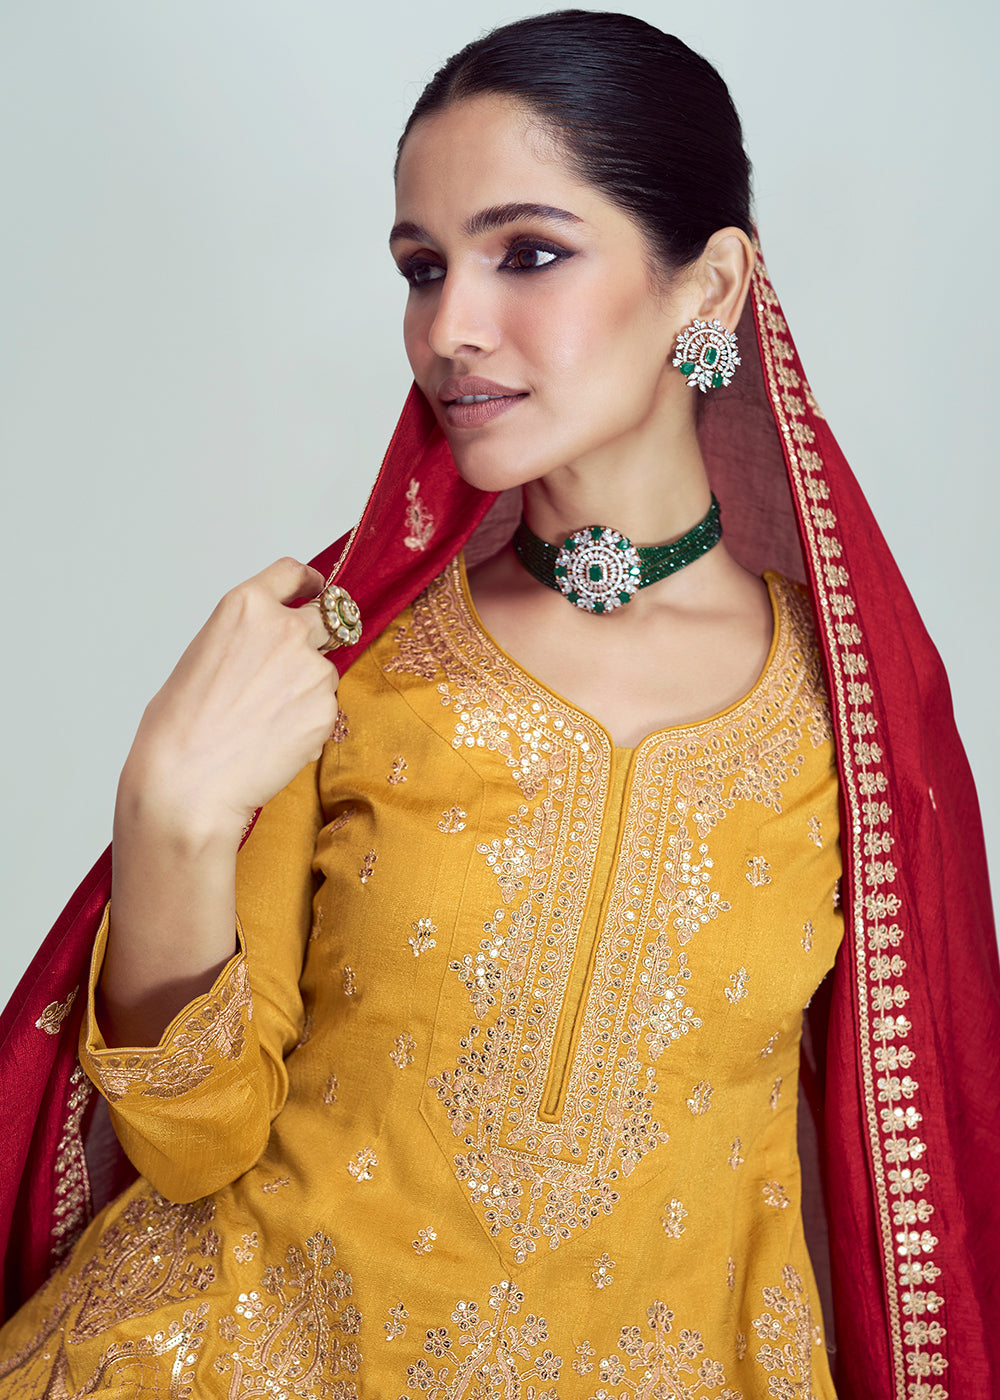 BuyIndian Wedding Dresses Online for Women in USA